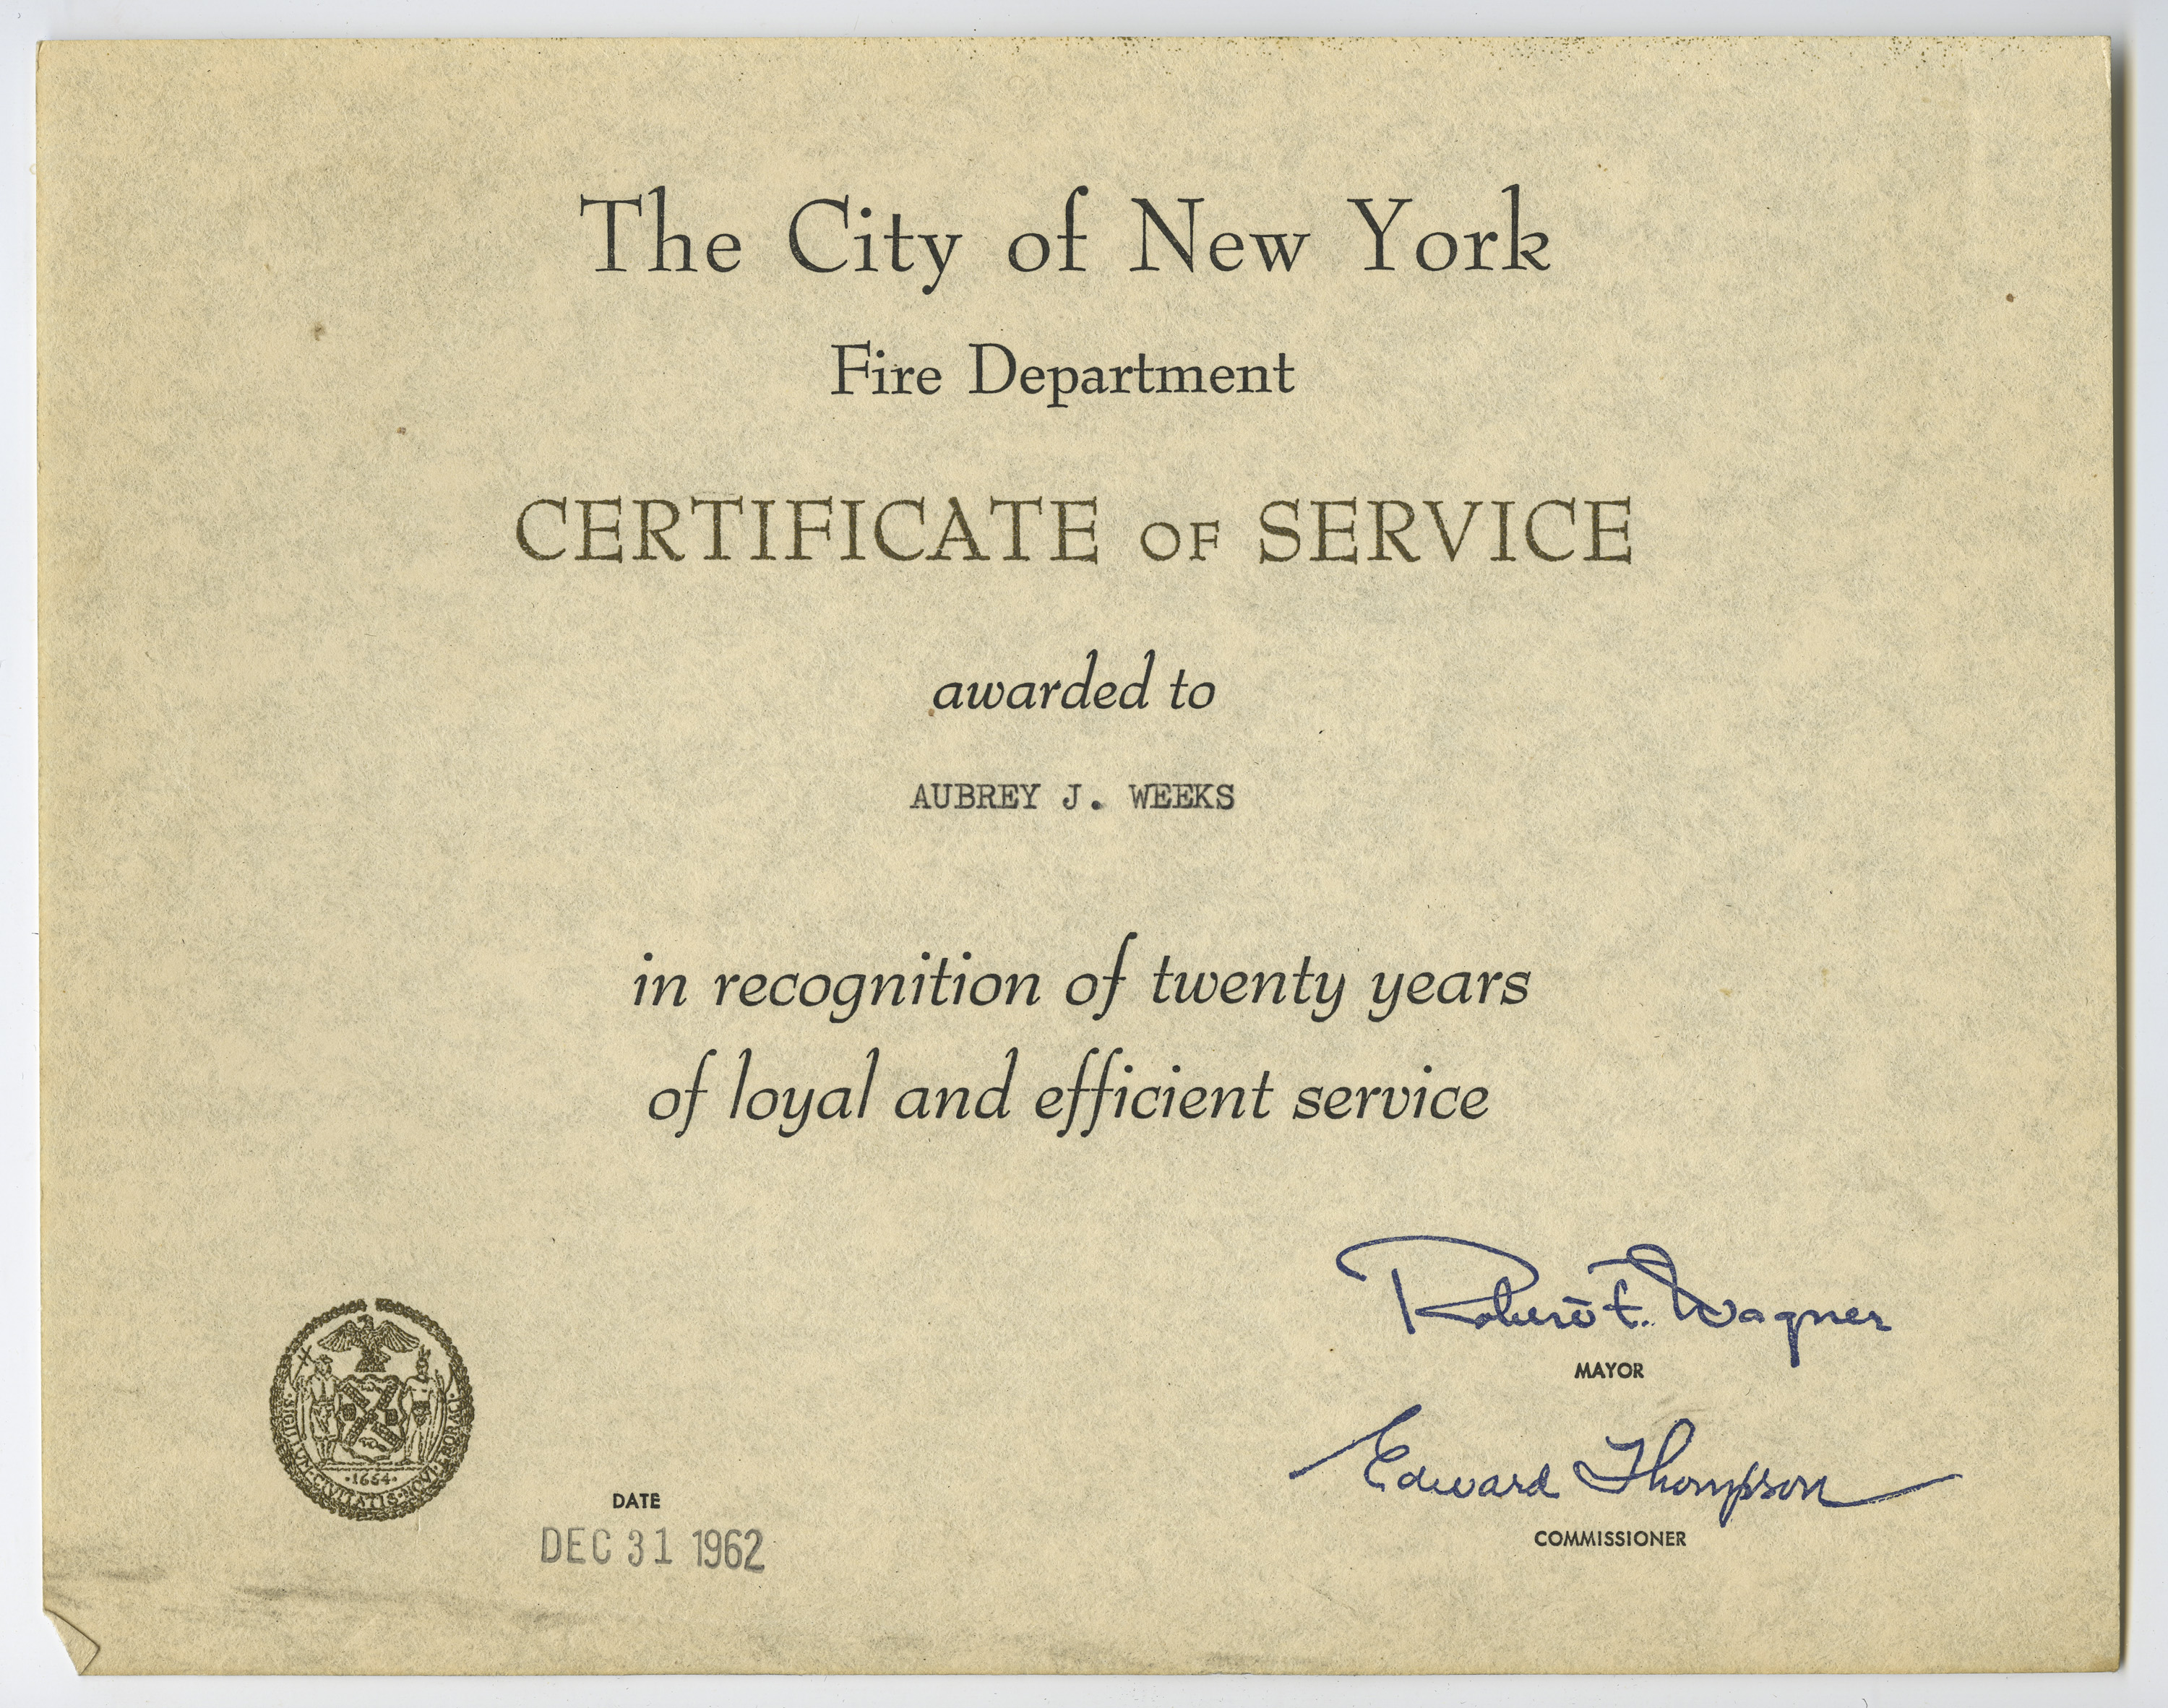 Weeks' Certificate of Service.